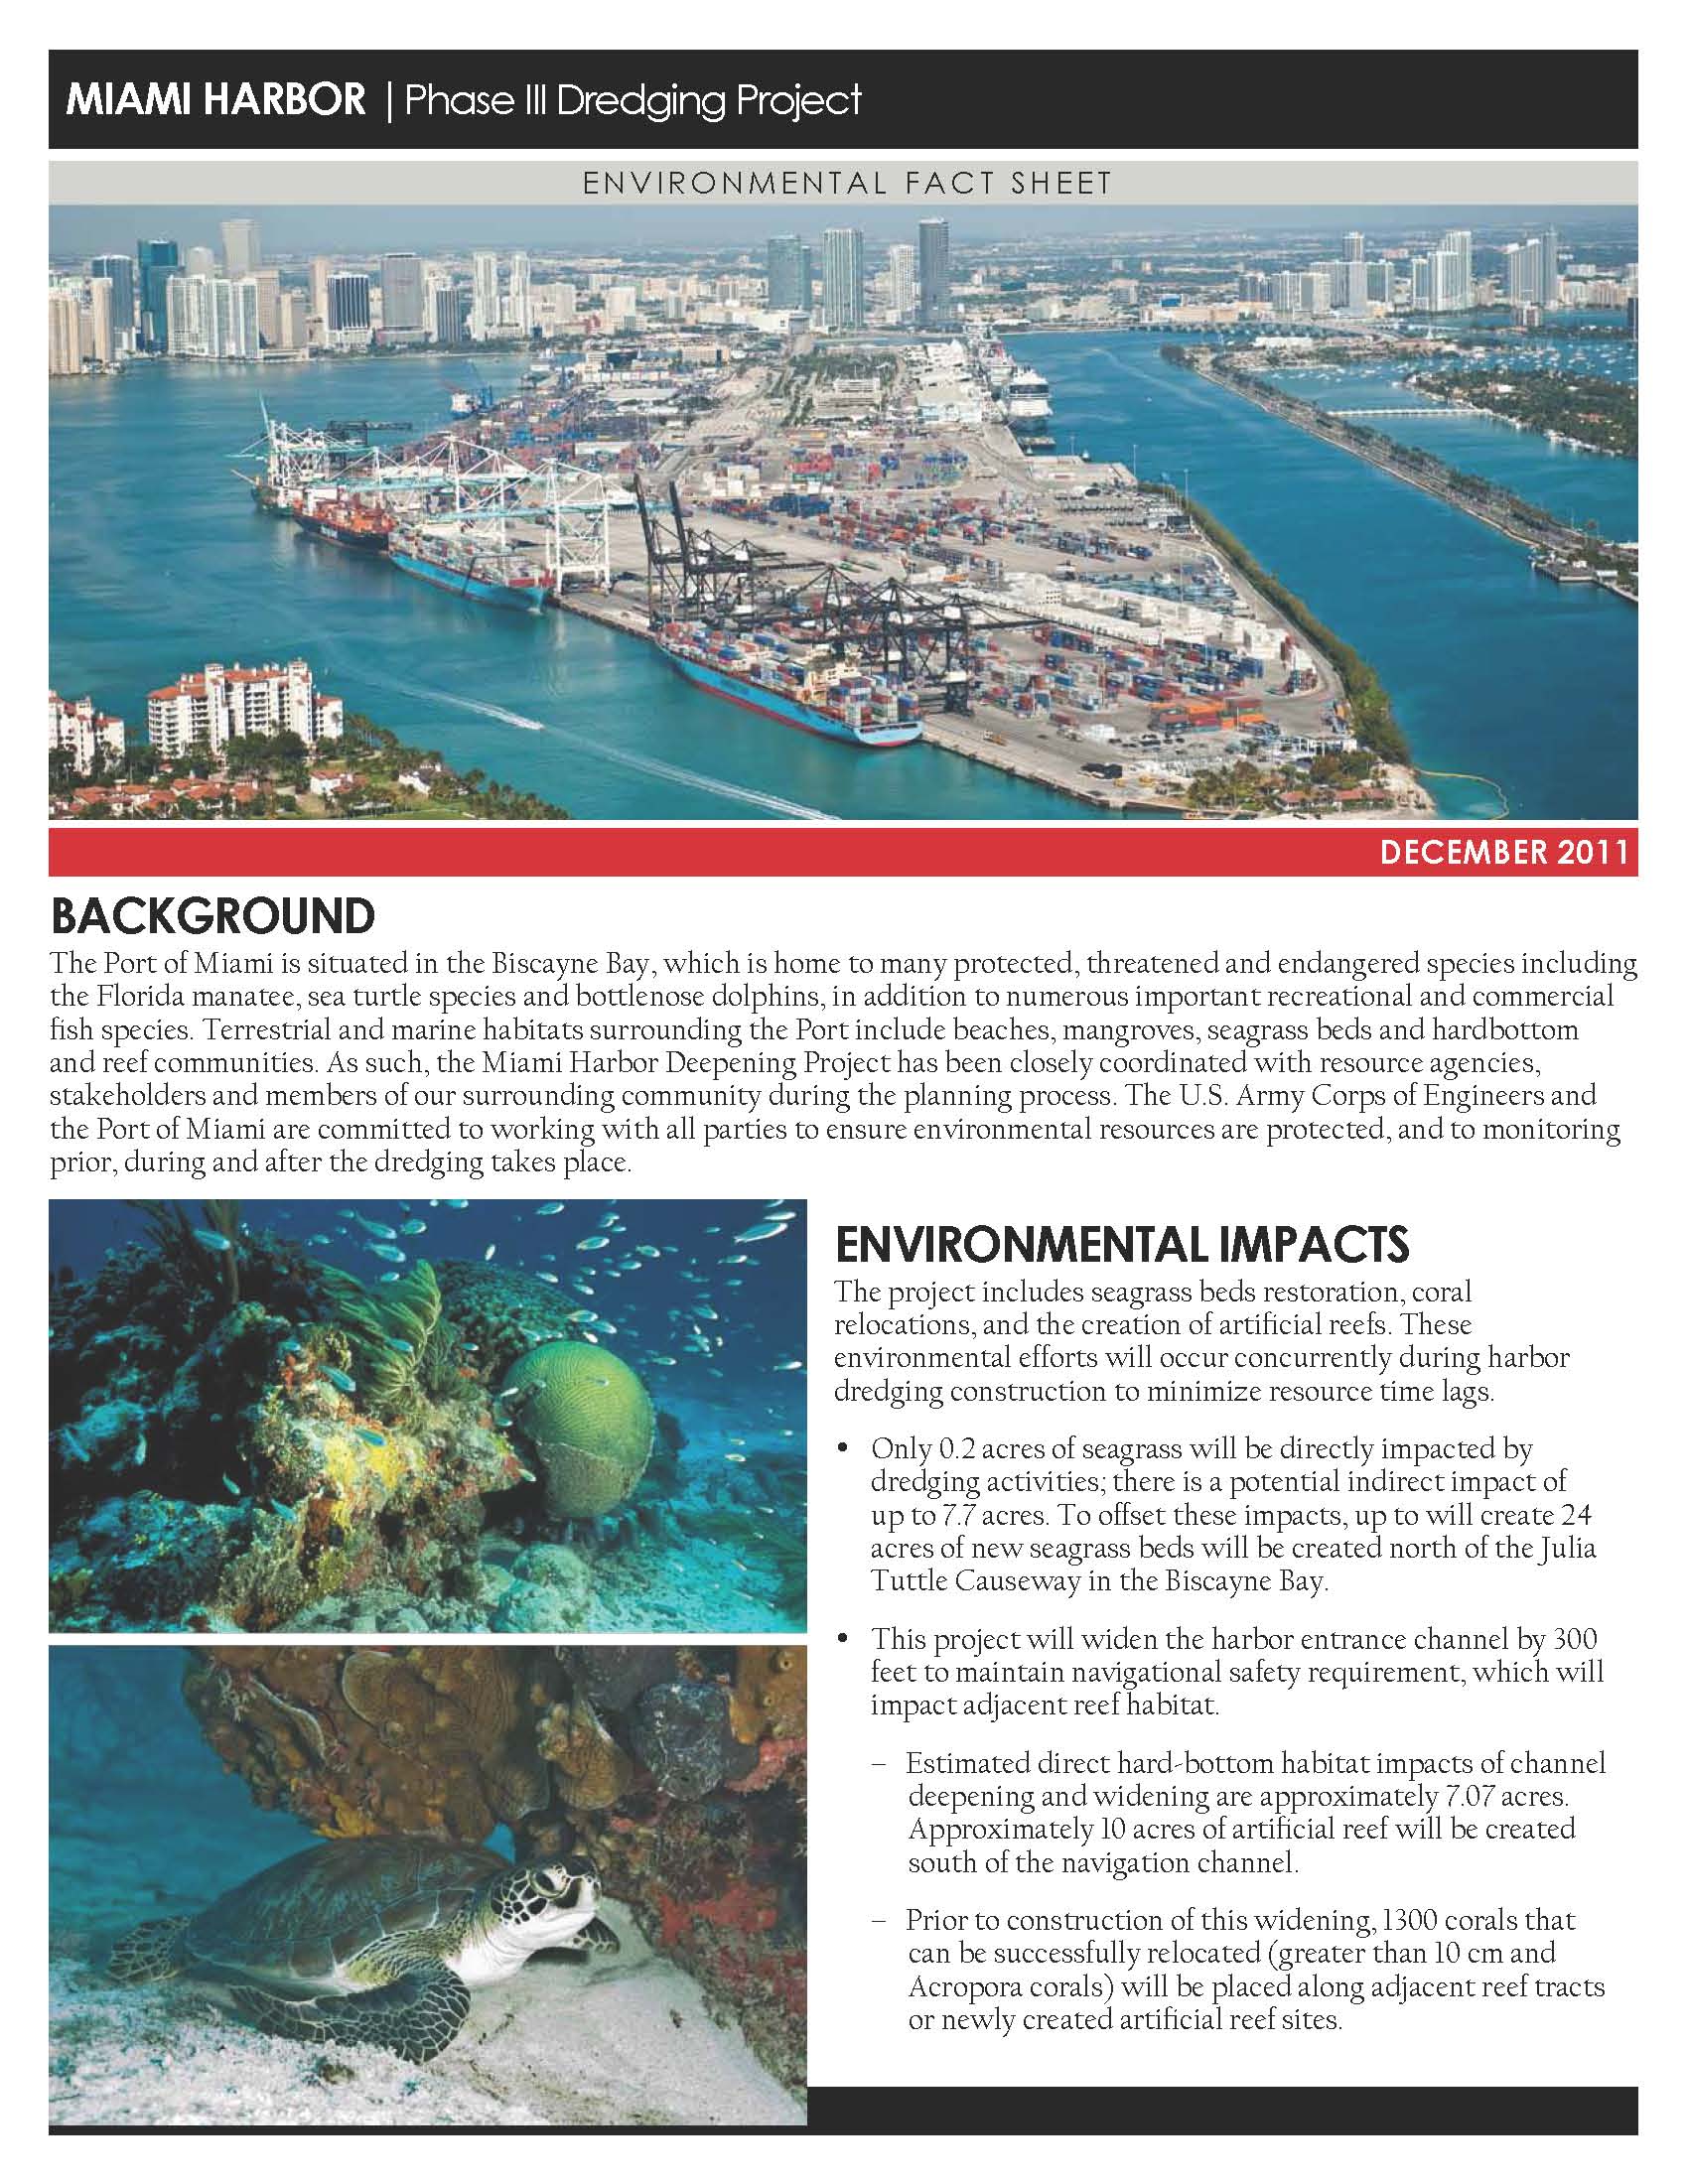 Port of Miami Fact sheet